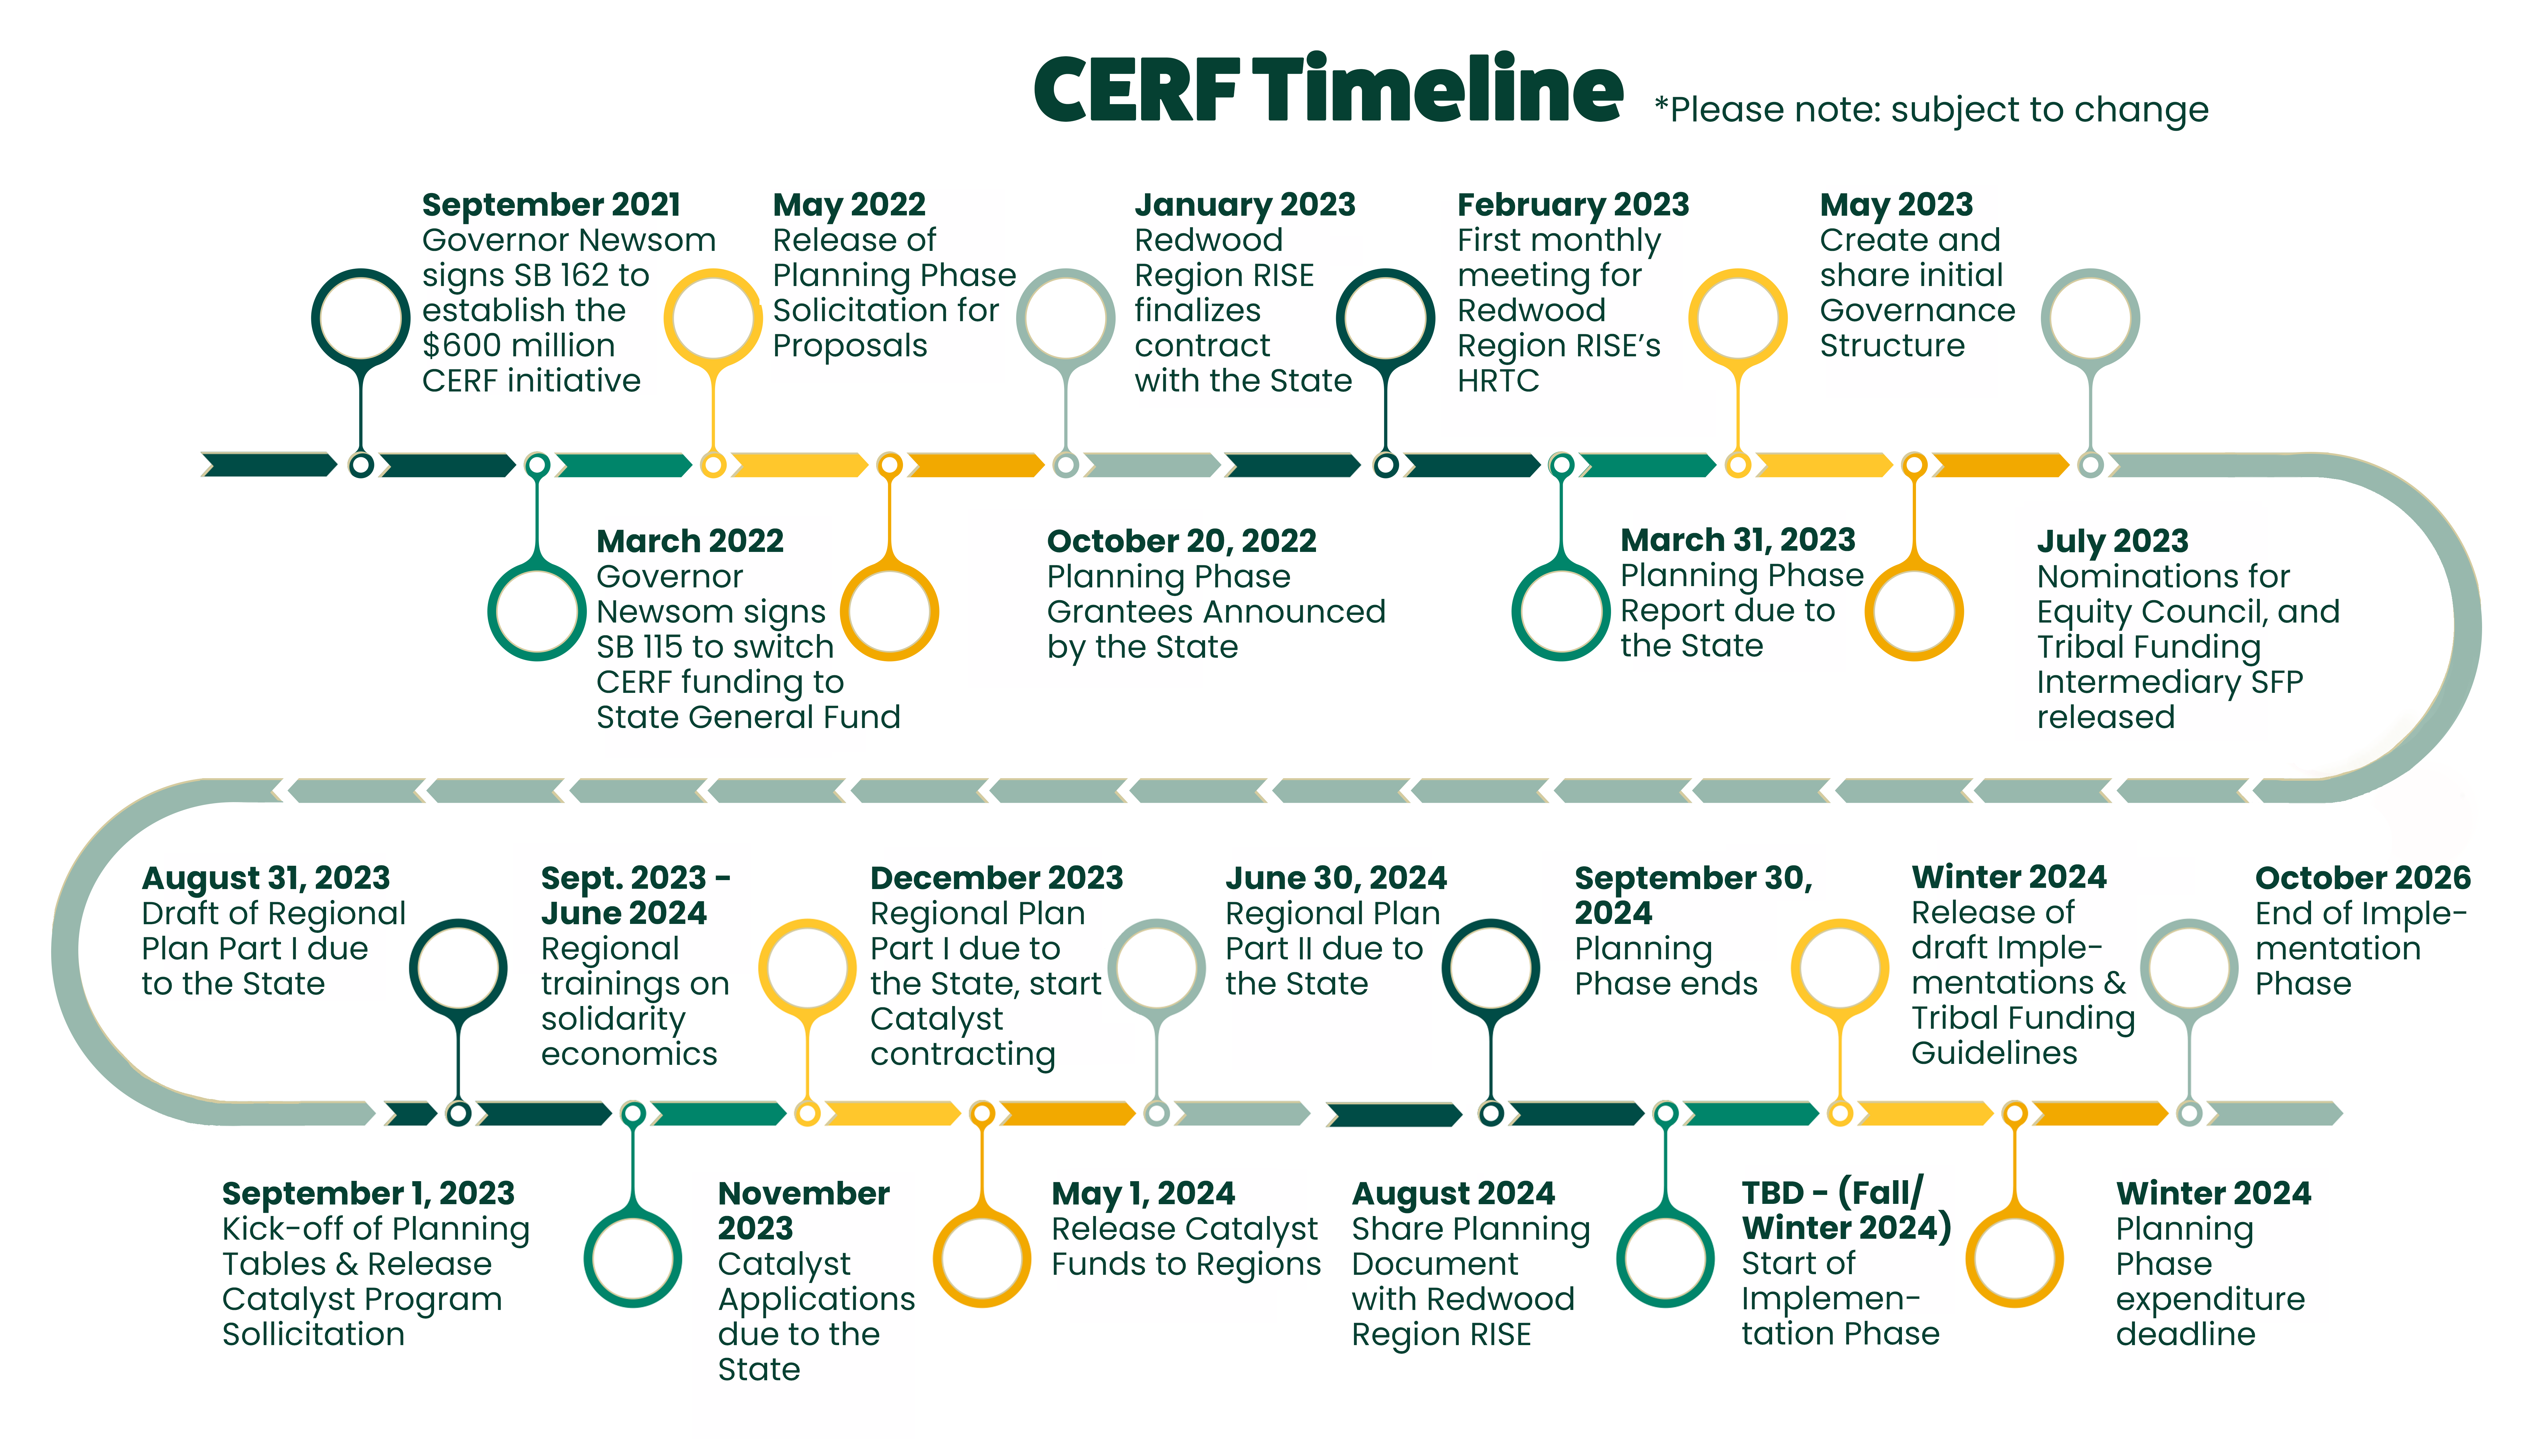 CERF Timeline for the Redwood Region RISE 2022 - 2023 - 2024 - 2025 - 2026